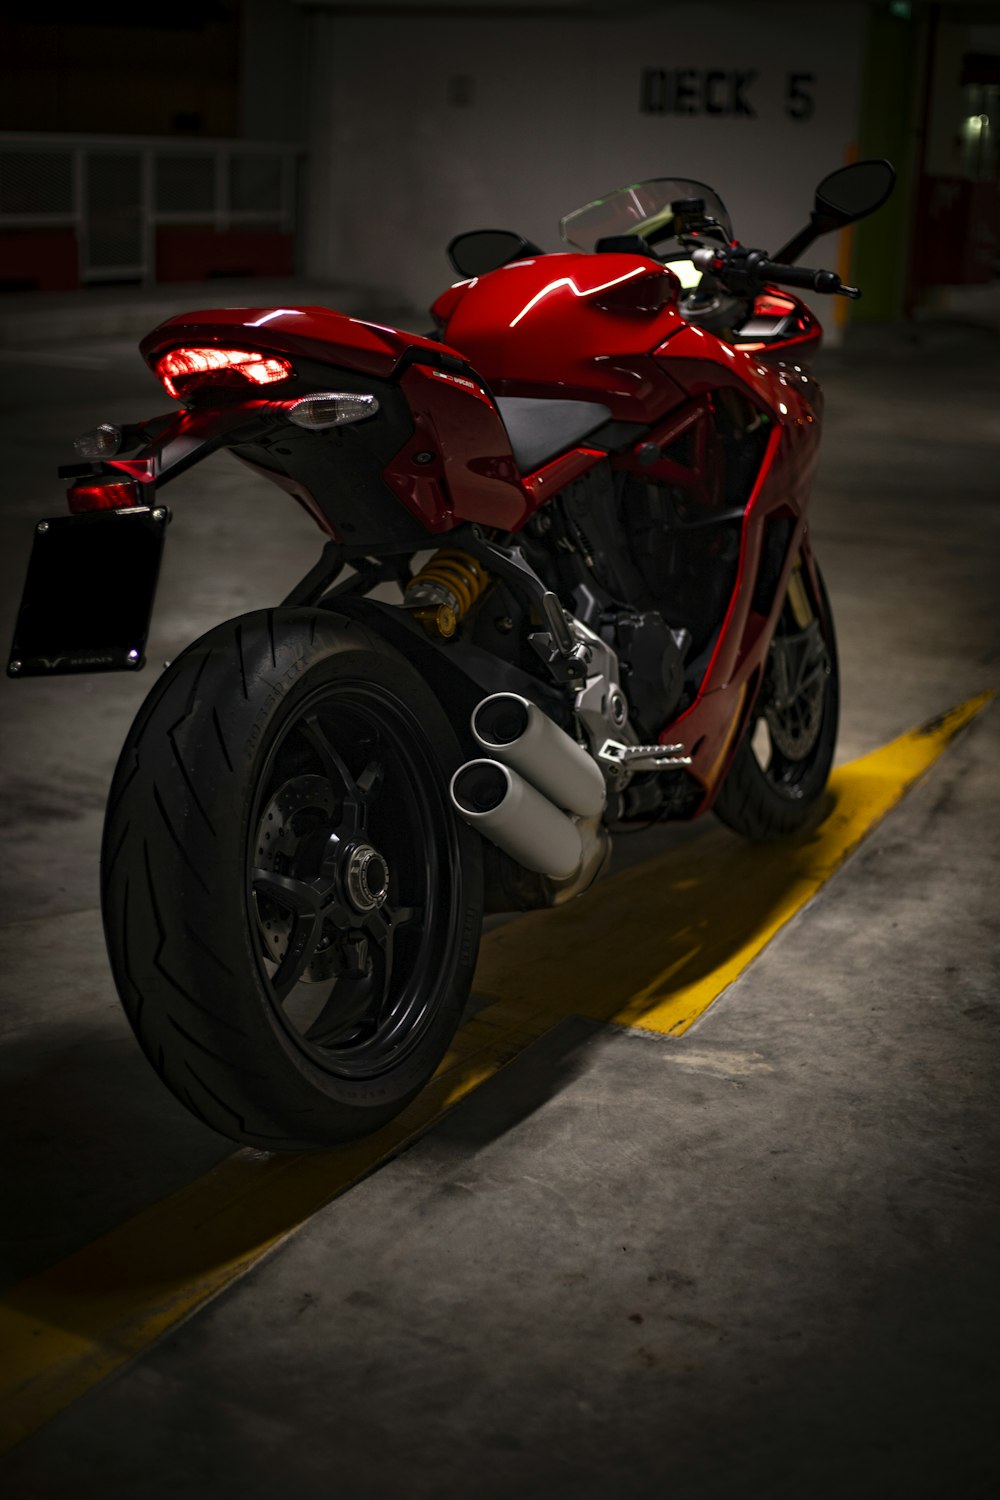 Motocicleta roja y negra